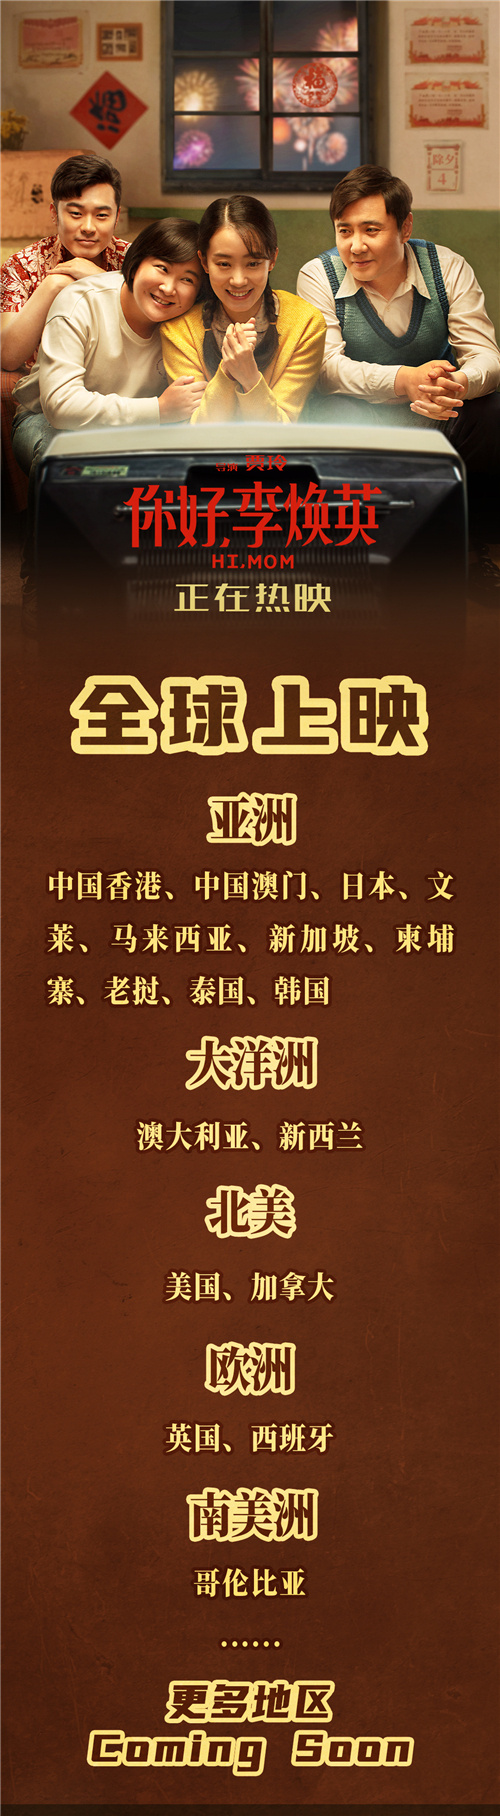 instal the last version for ipod Ni Hao, Li Huan Ying